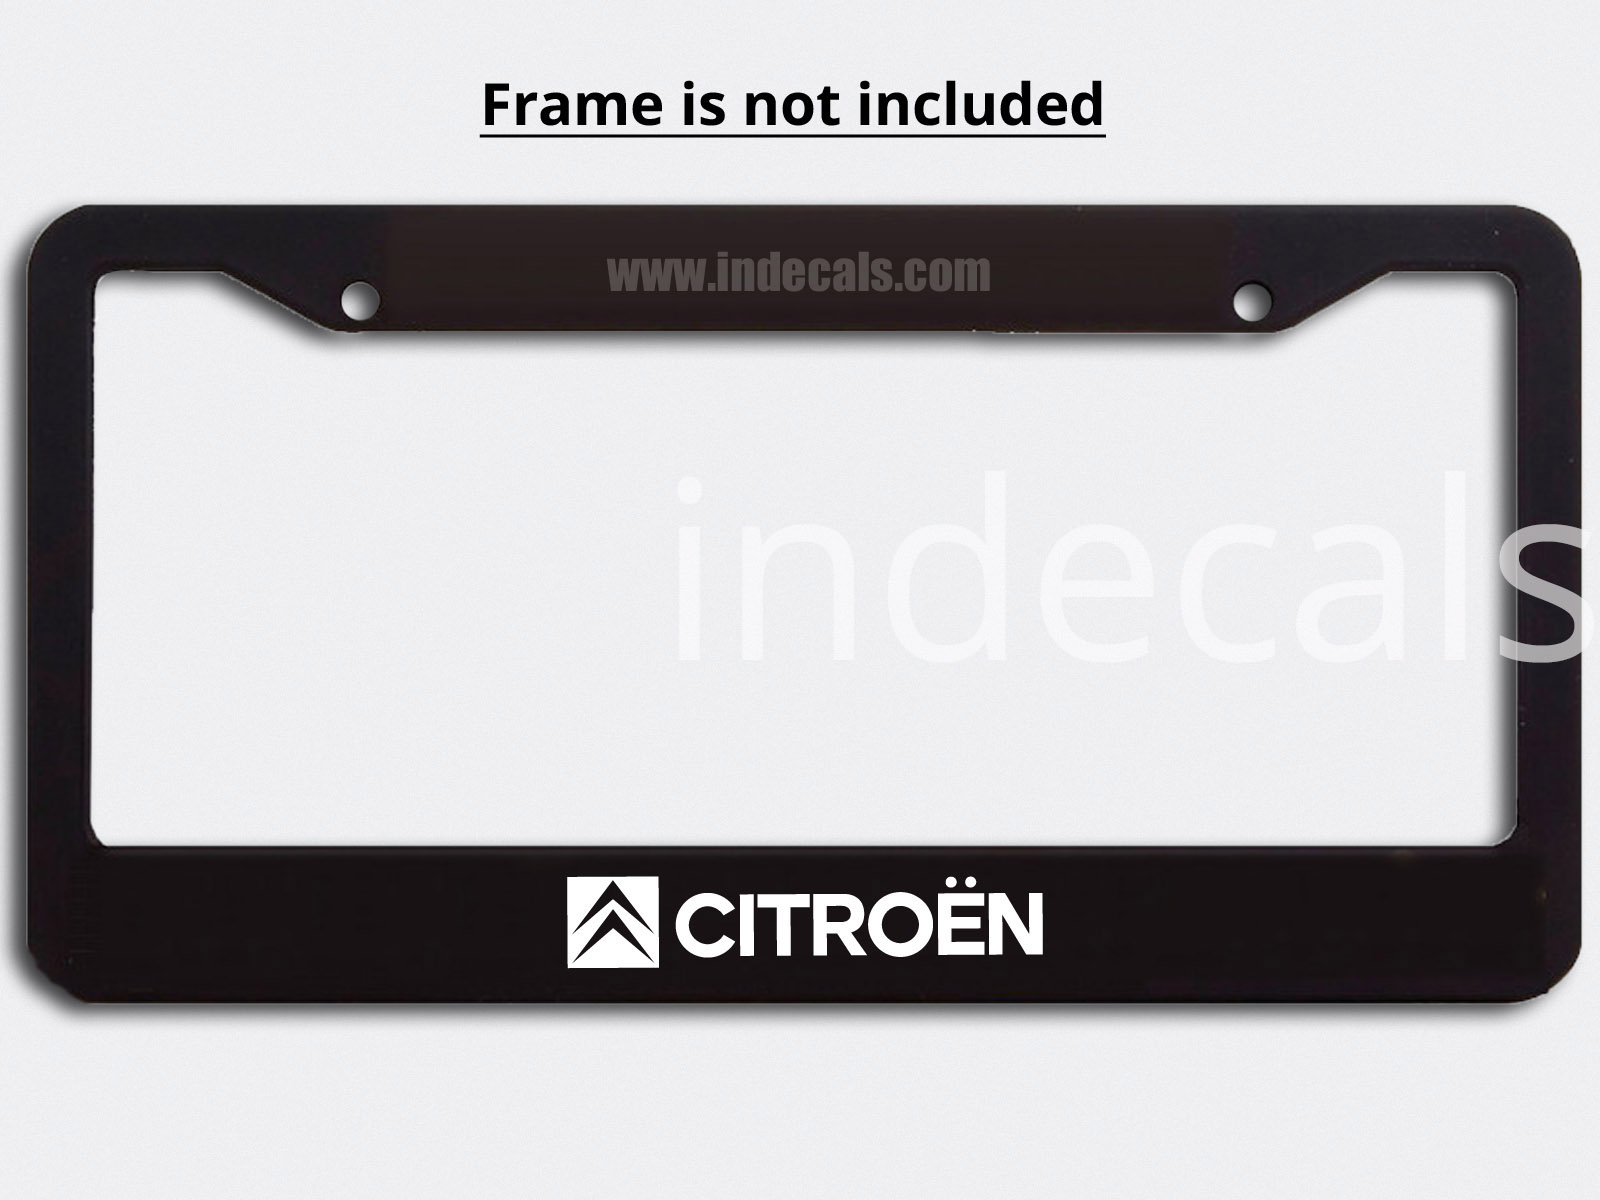 3 x Citroen Stickers for Plate Frame - White